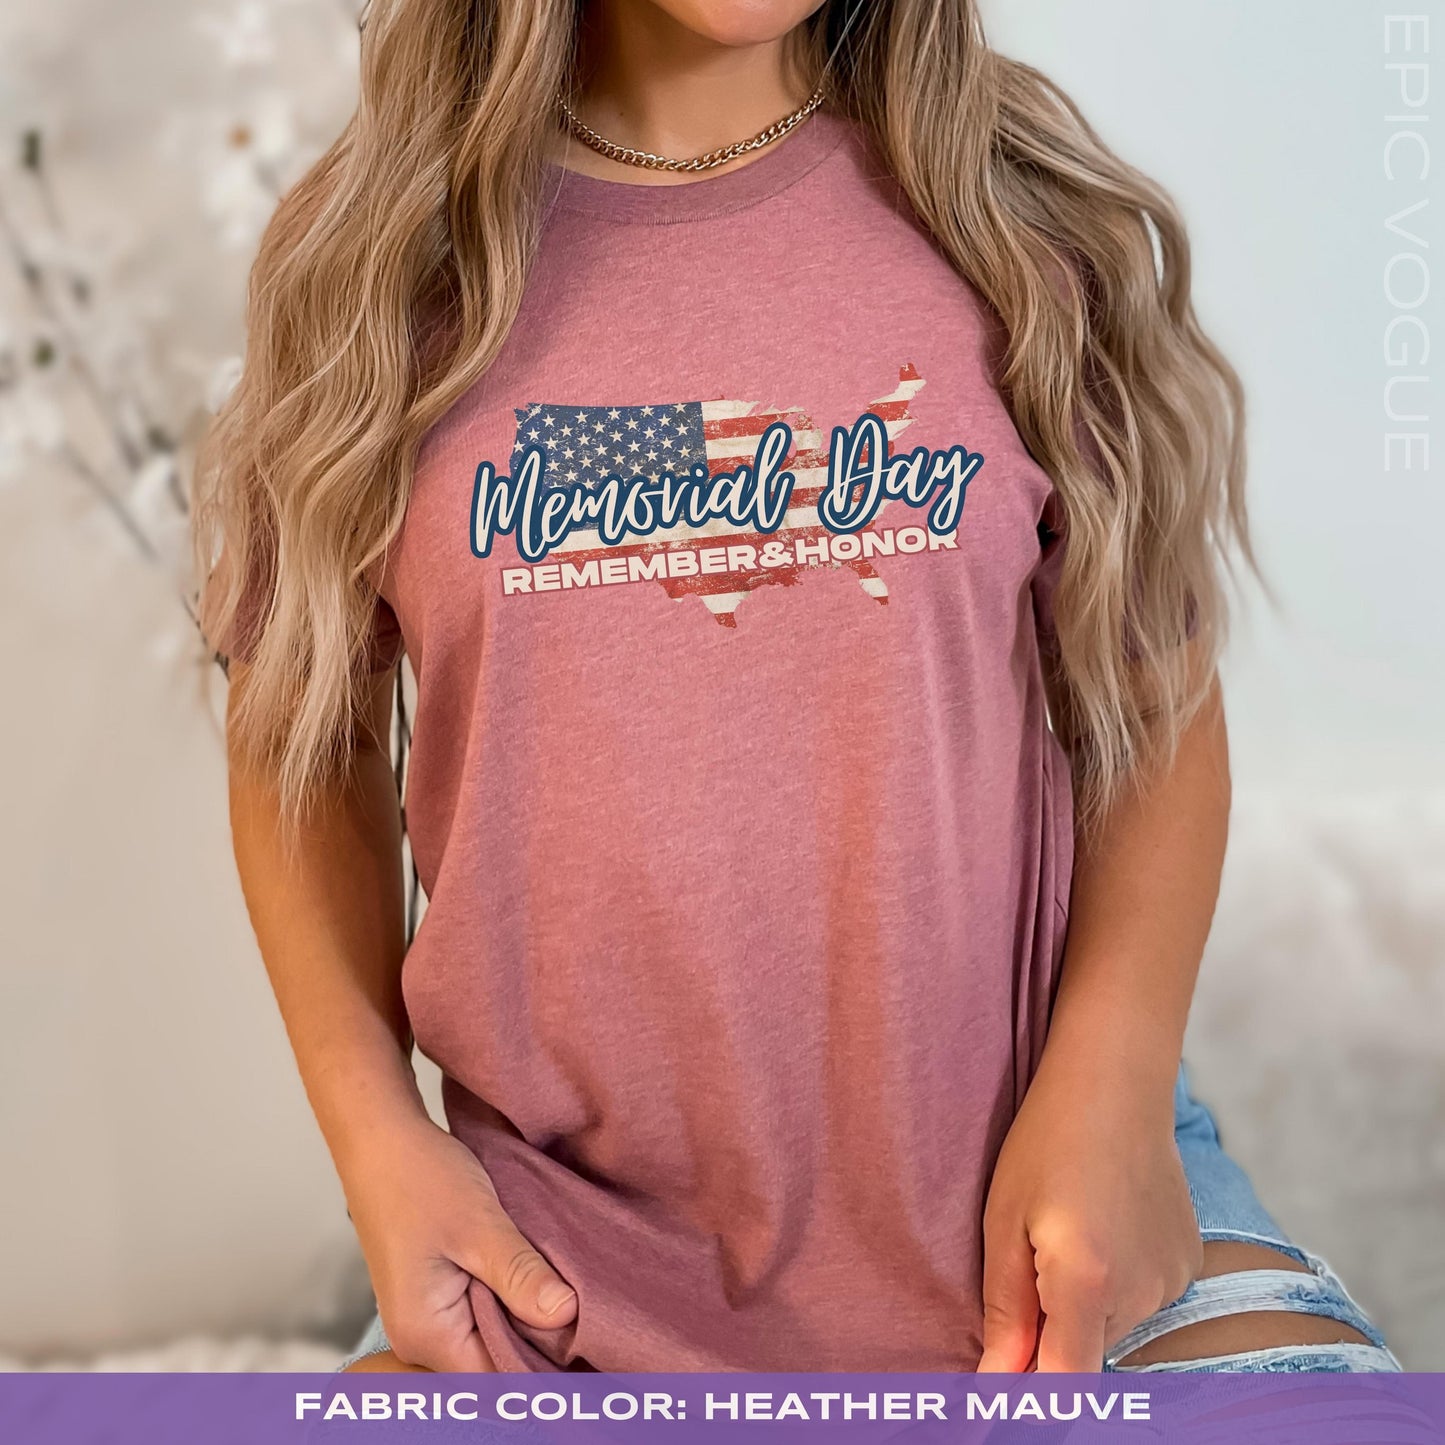 Heather Mauve T-Shirt